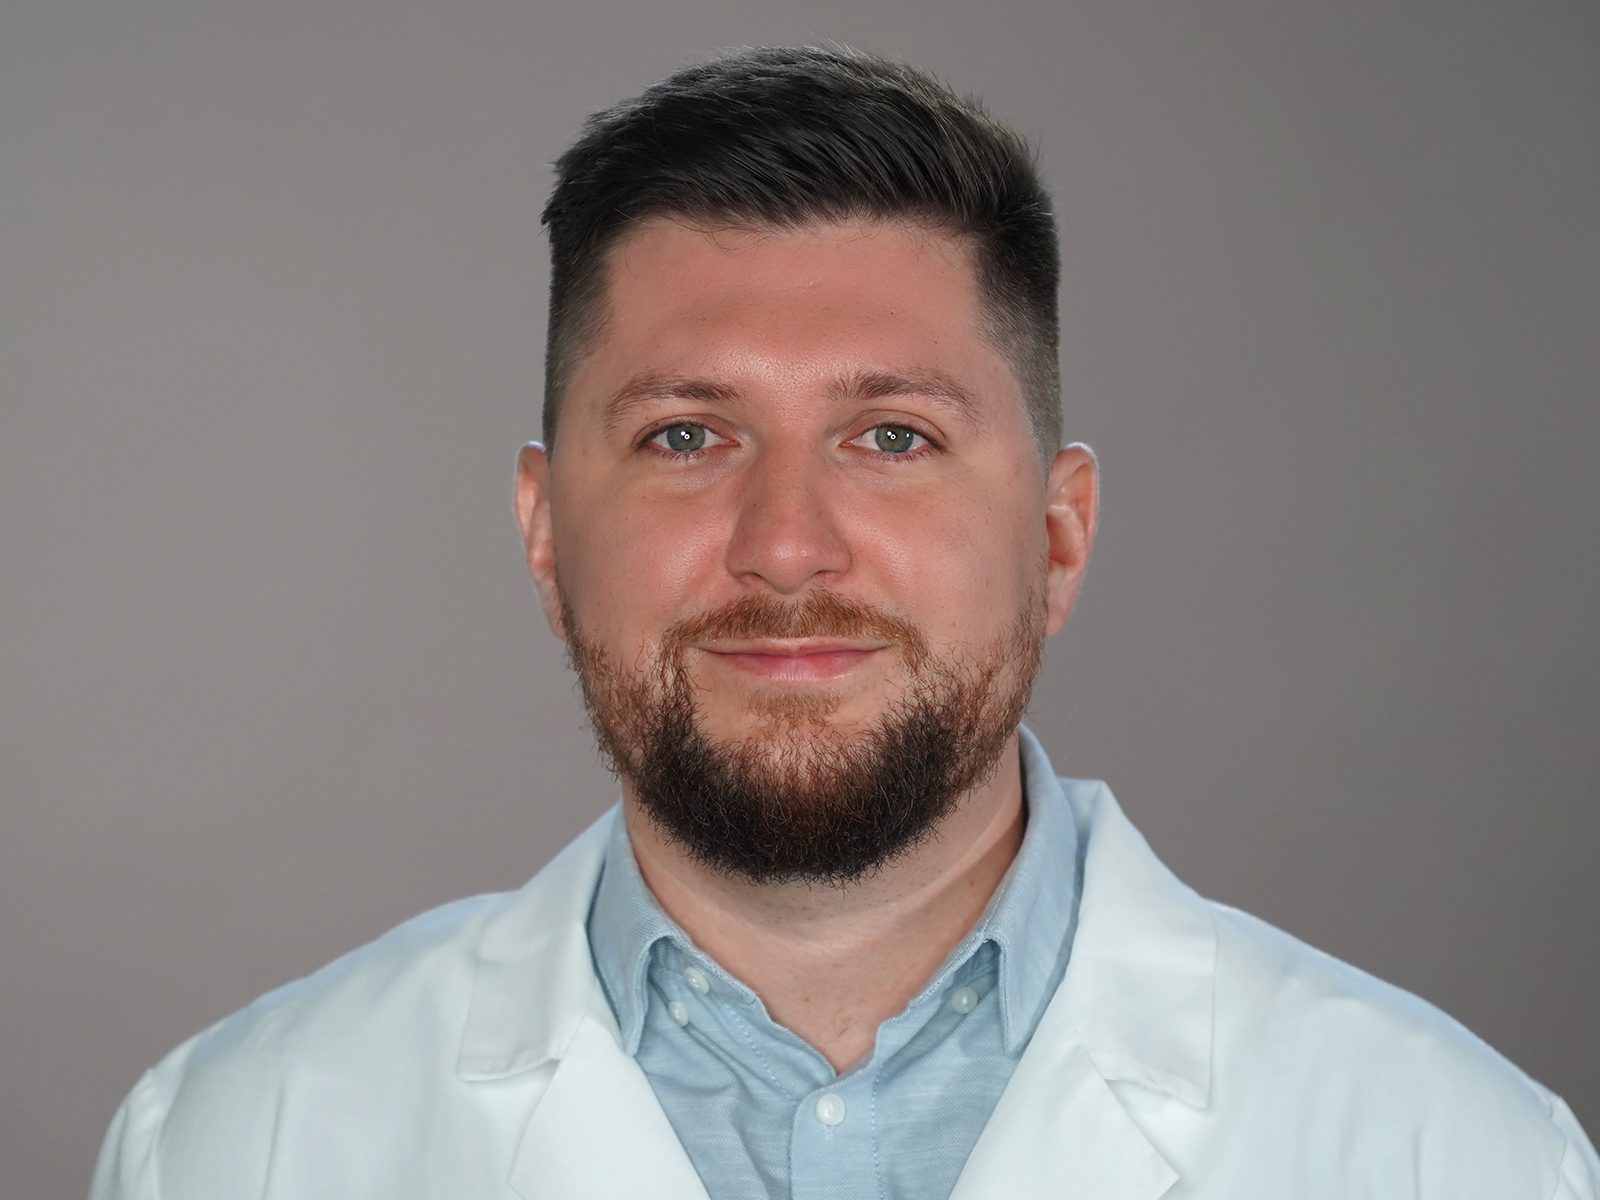 Dr. Zoltán Balogh, urologist at the Buda Health Center